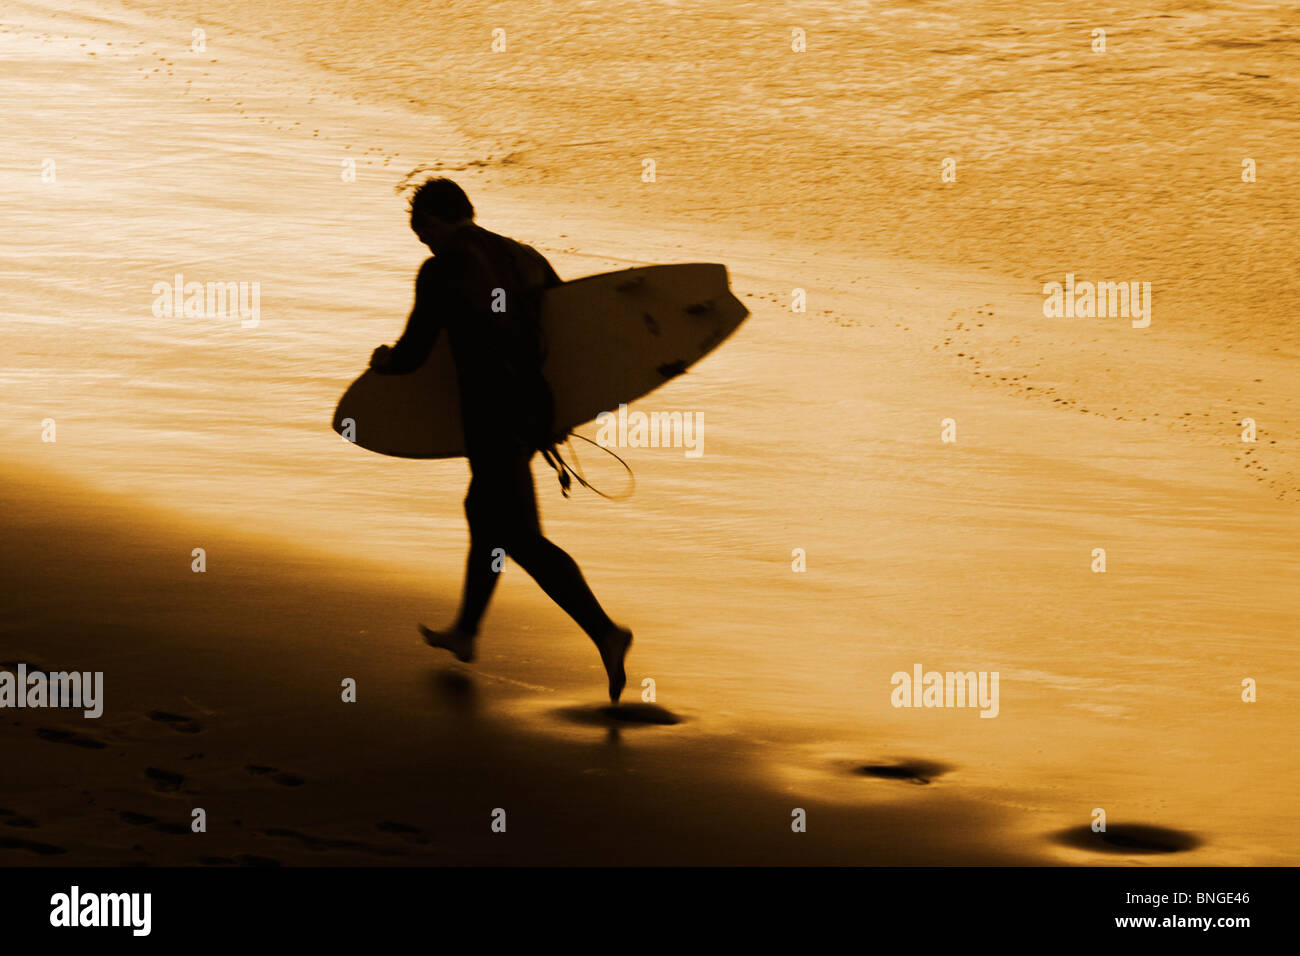 Surfer am Strand bei Sonnenuntergang laufen Stockfoto